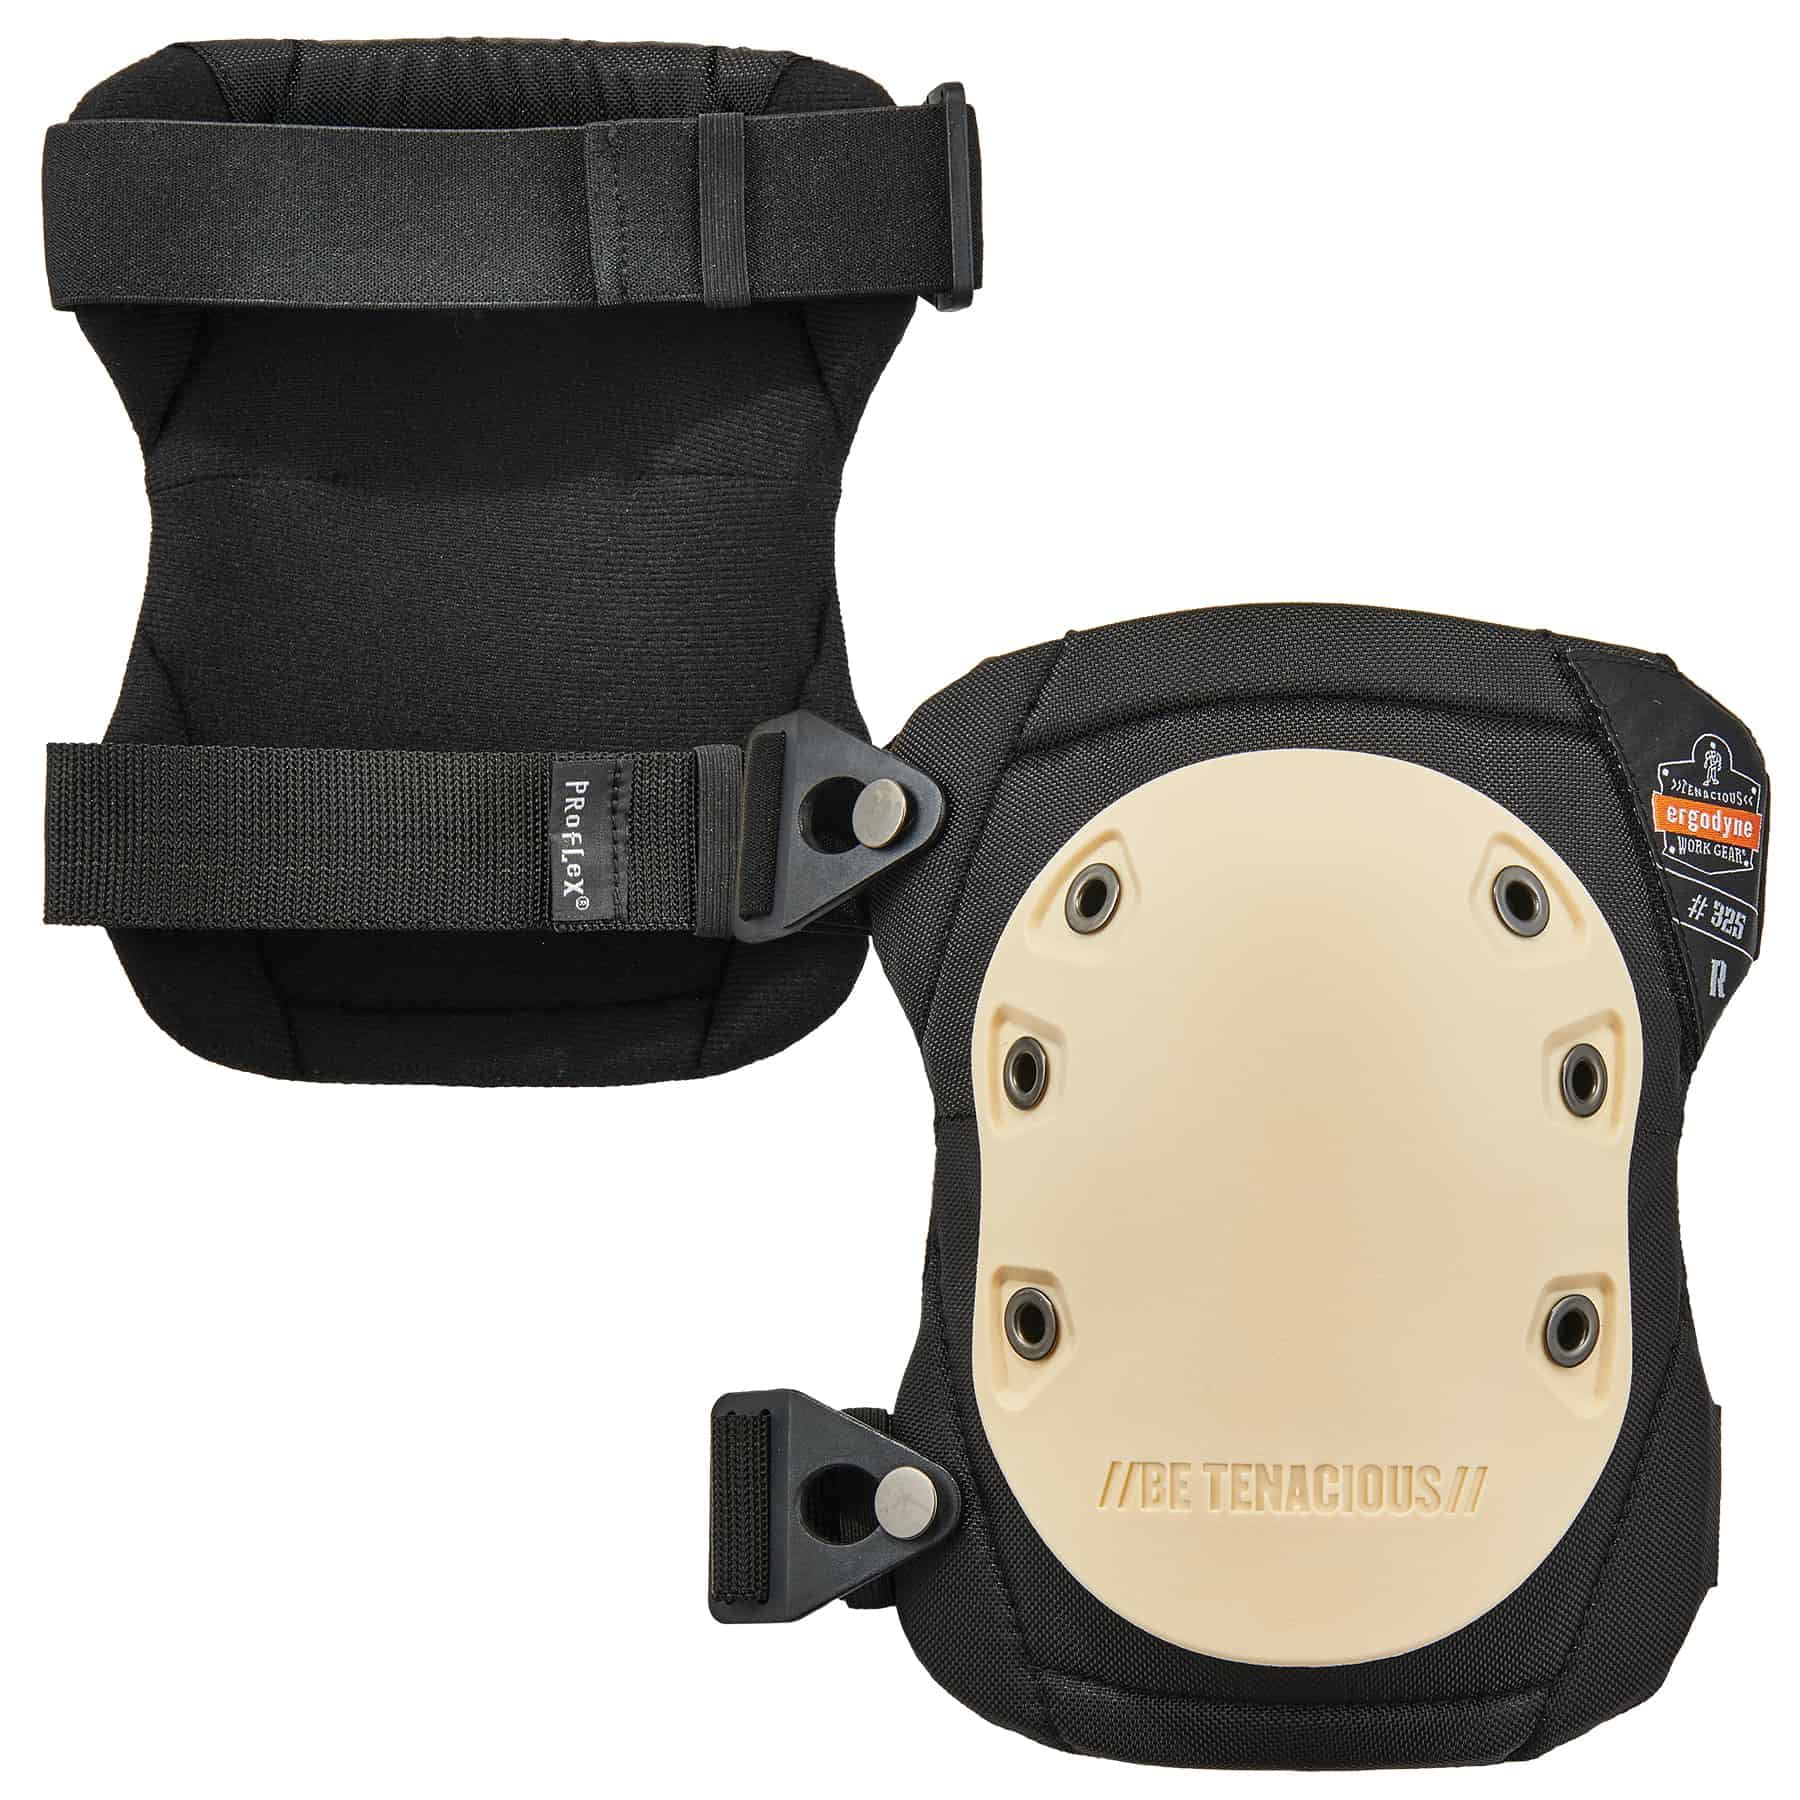 Ergodyne Knee Pads Pad Safety Work Protective Work ProFlex Leather Wide Soft Cap 